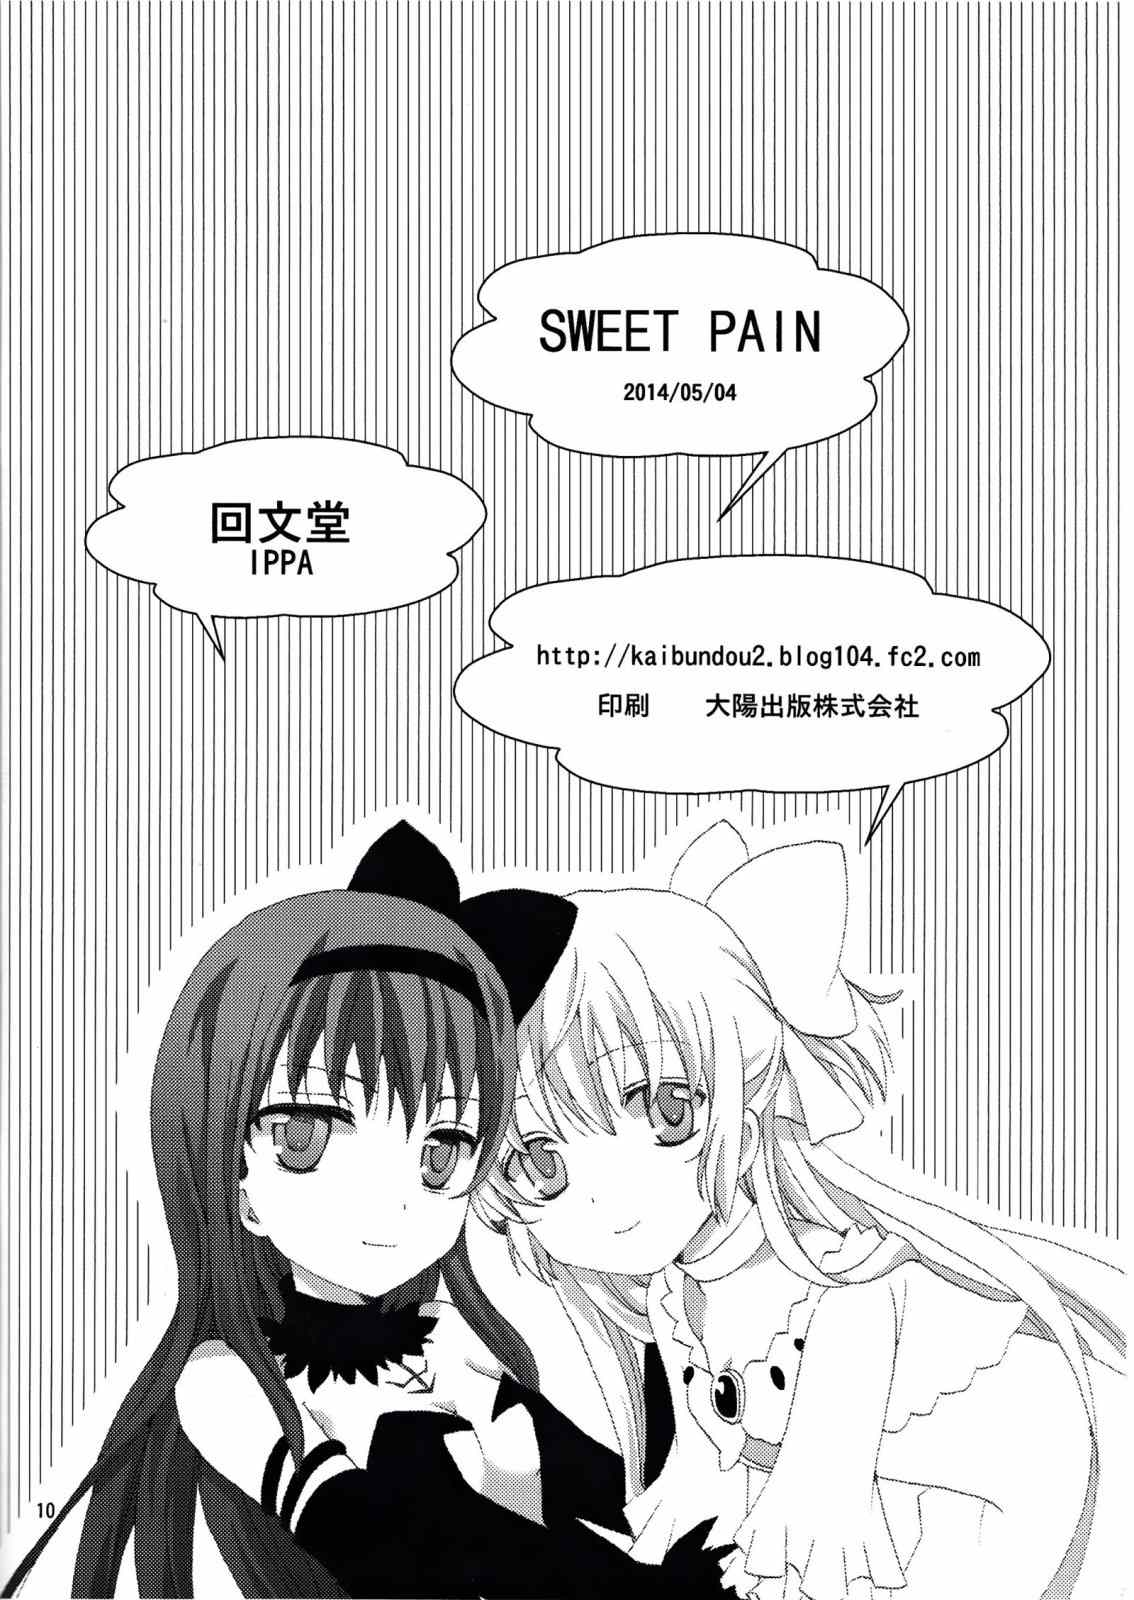 SWEET PAIN - 第1話 - 1